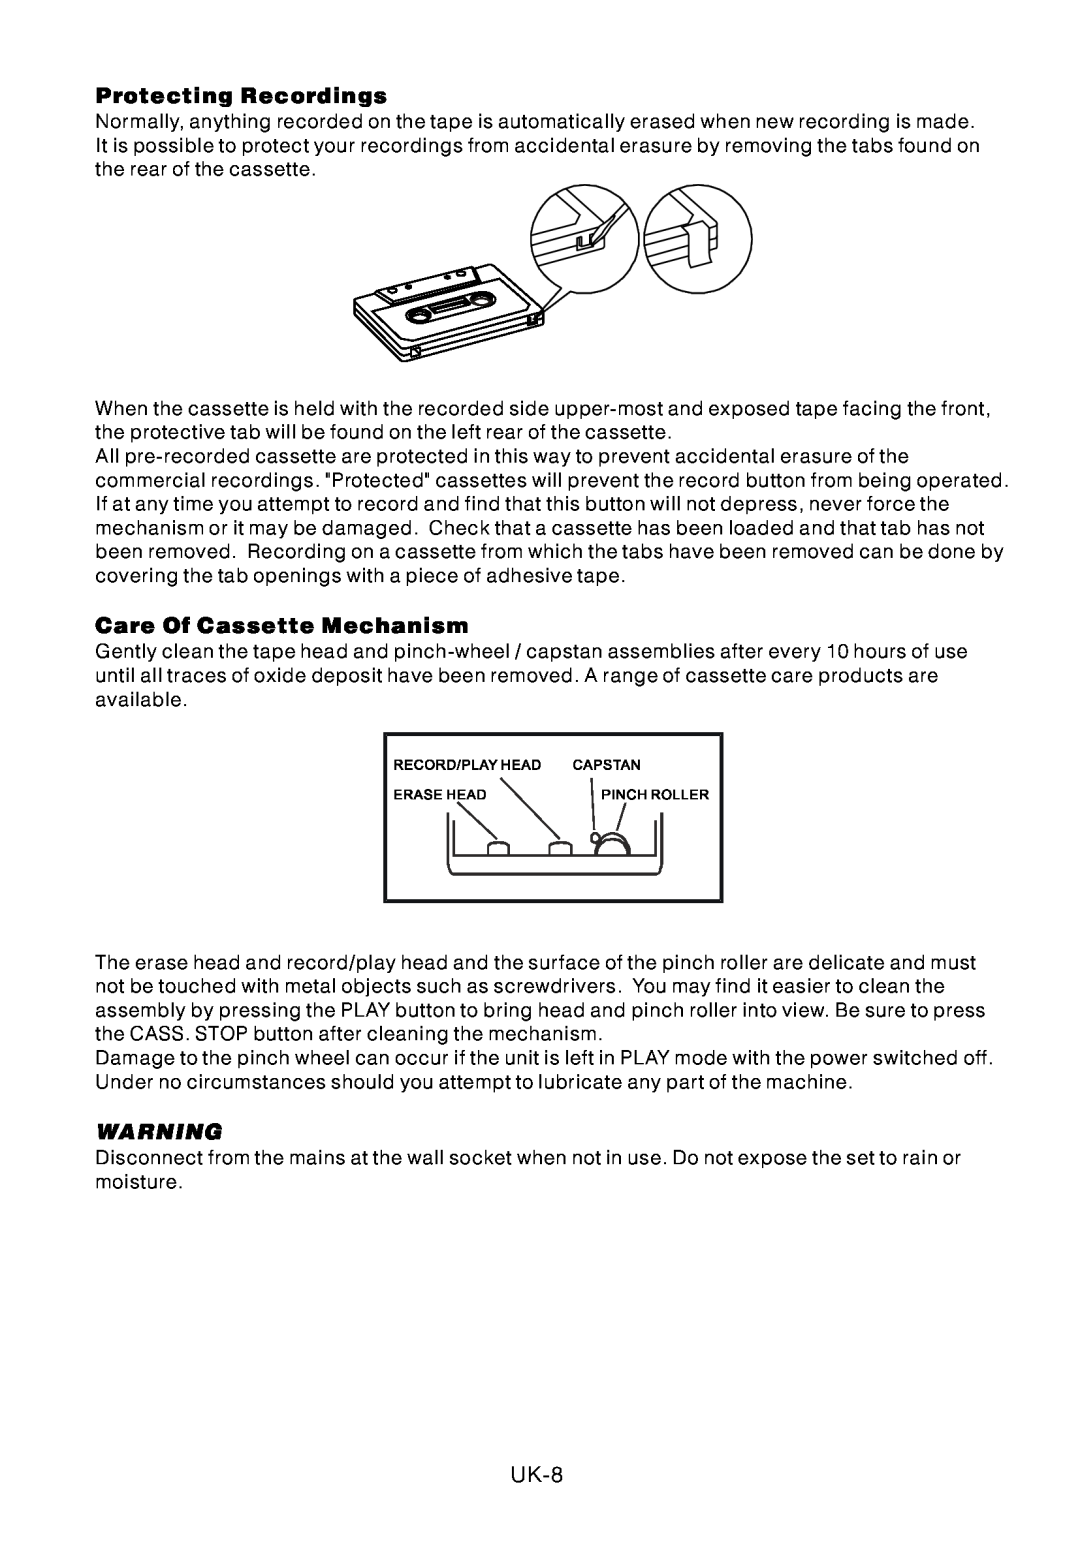 Motorola BSA-1520 instruction manual Protecting Recordings, Care Of Cassette Mechanism, UK-8 